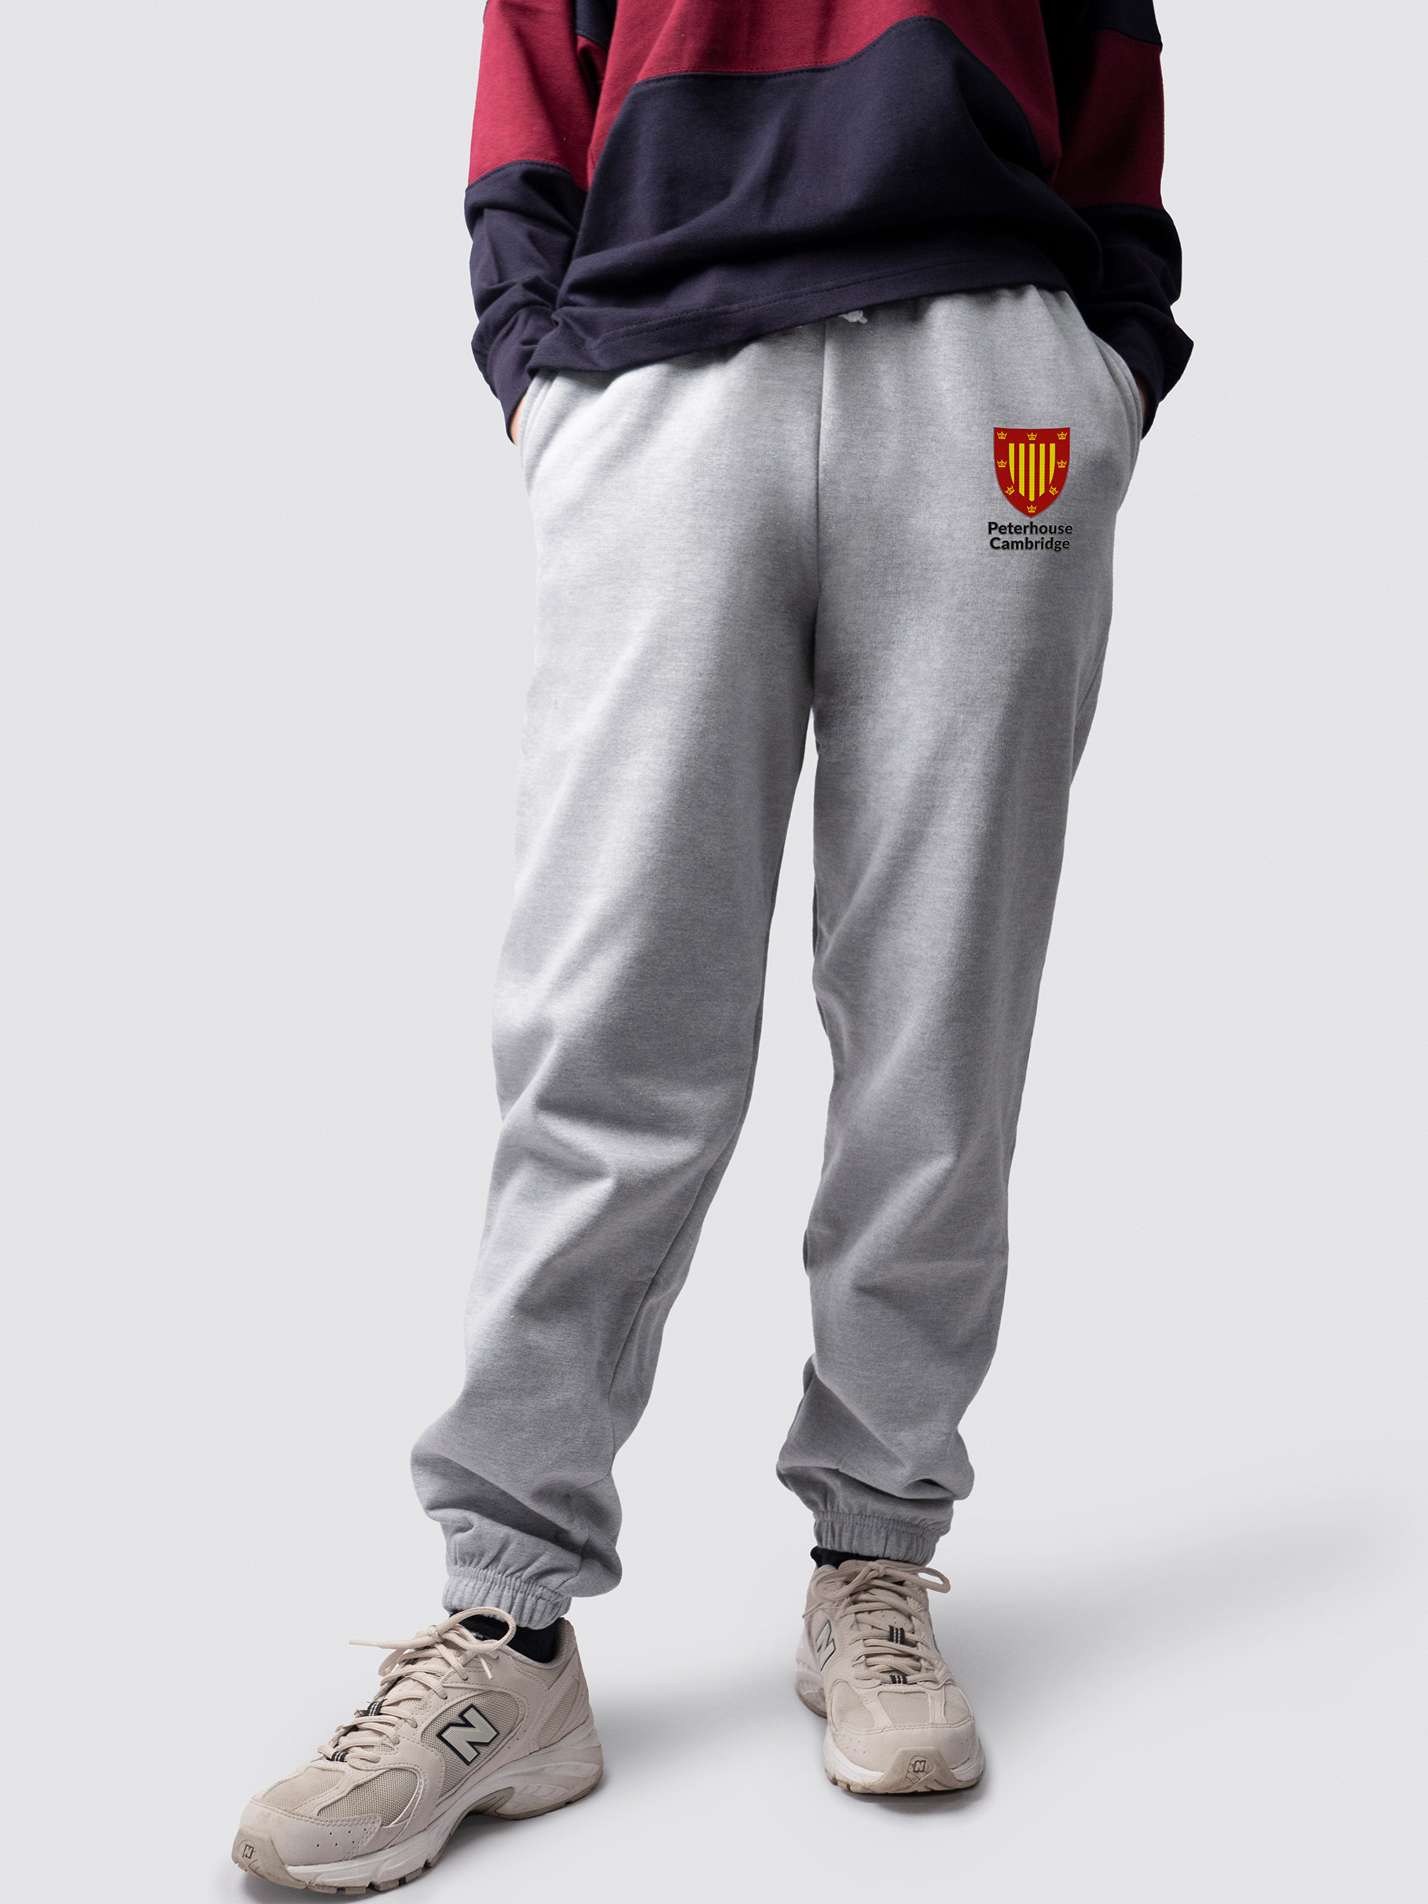 undergraduate cuffed sweatpants, made from soft cotton fabric, with Peterhouse logo